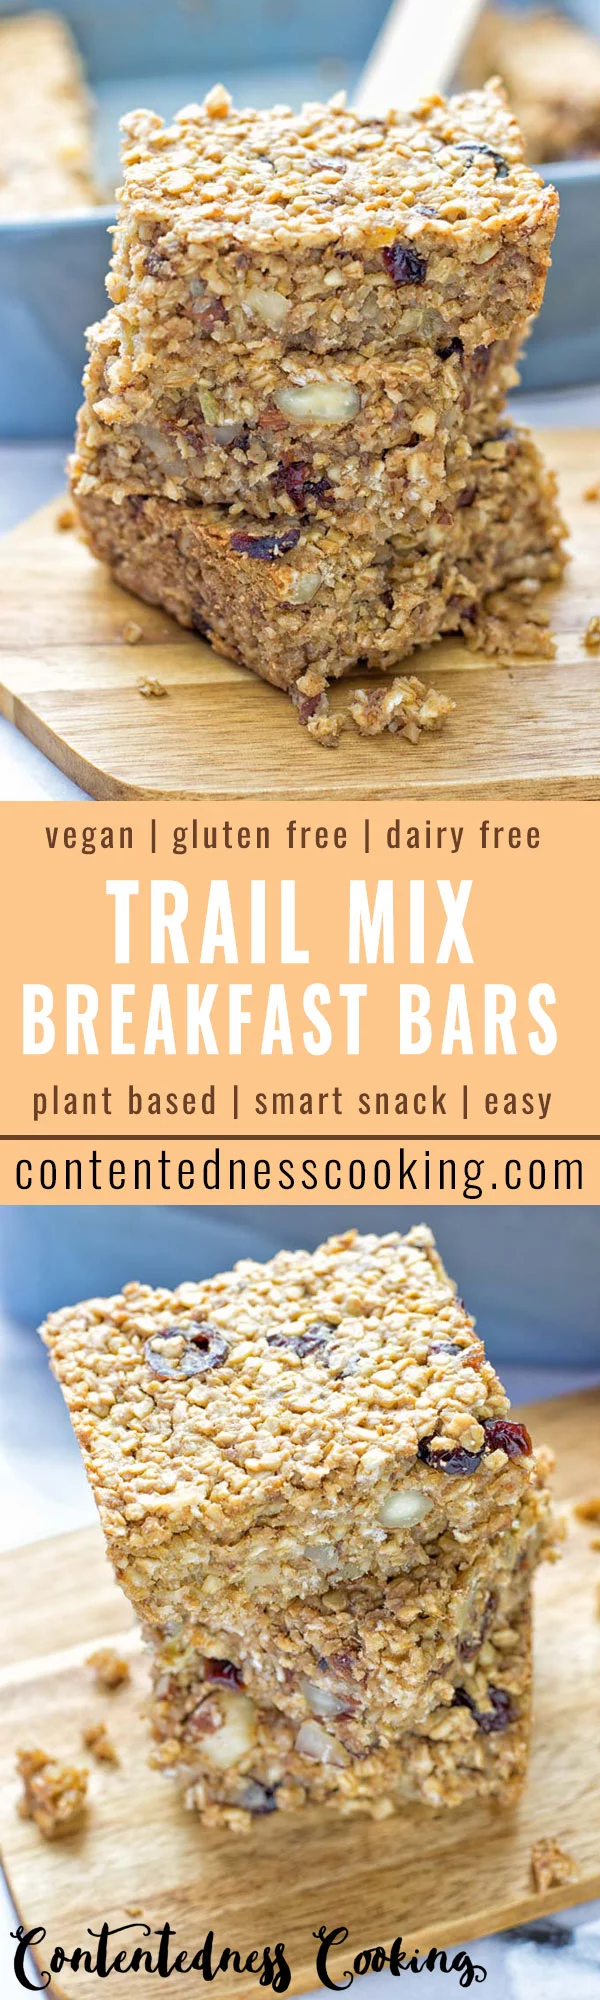 Trail Mix Breakfast Bars | #vegan #glutenfree #contentednesscooking